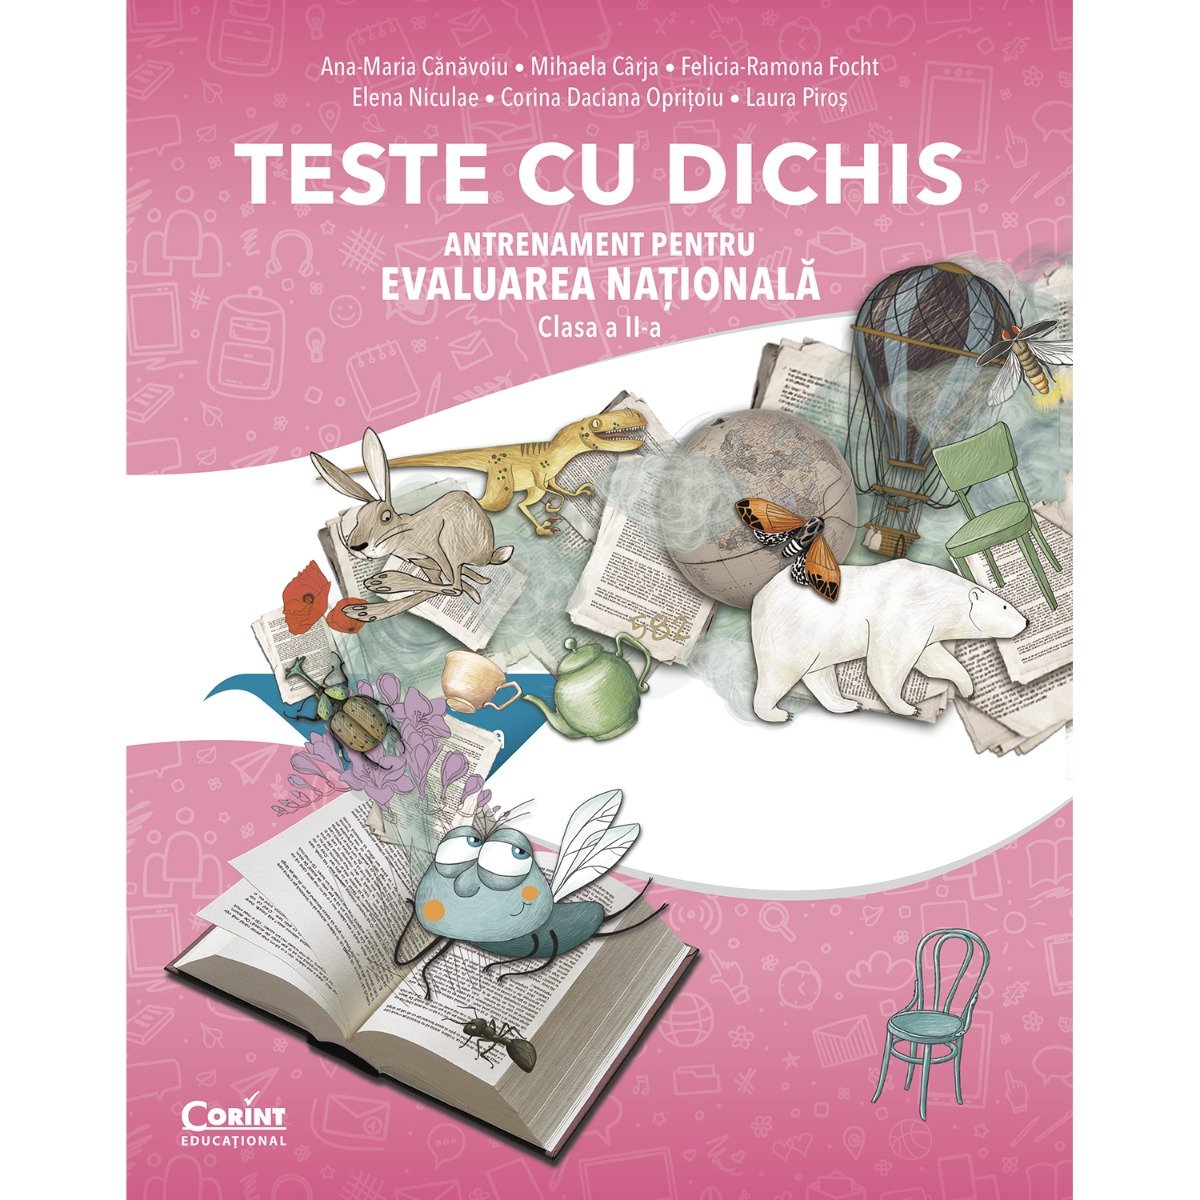 Teste cu dichis, Antrenament pentru evaluarea nationala, Clasa a II-a, Ana-Maria Canavoiu Ana-Maria